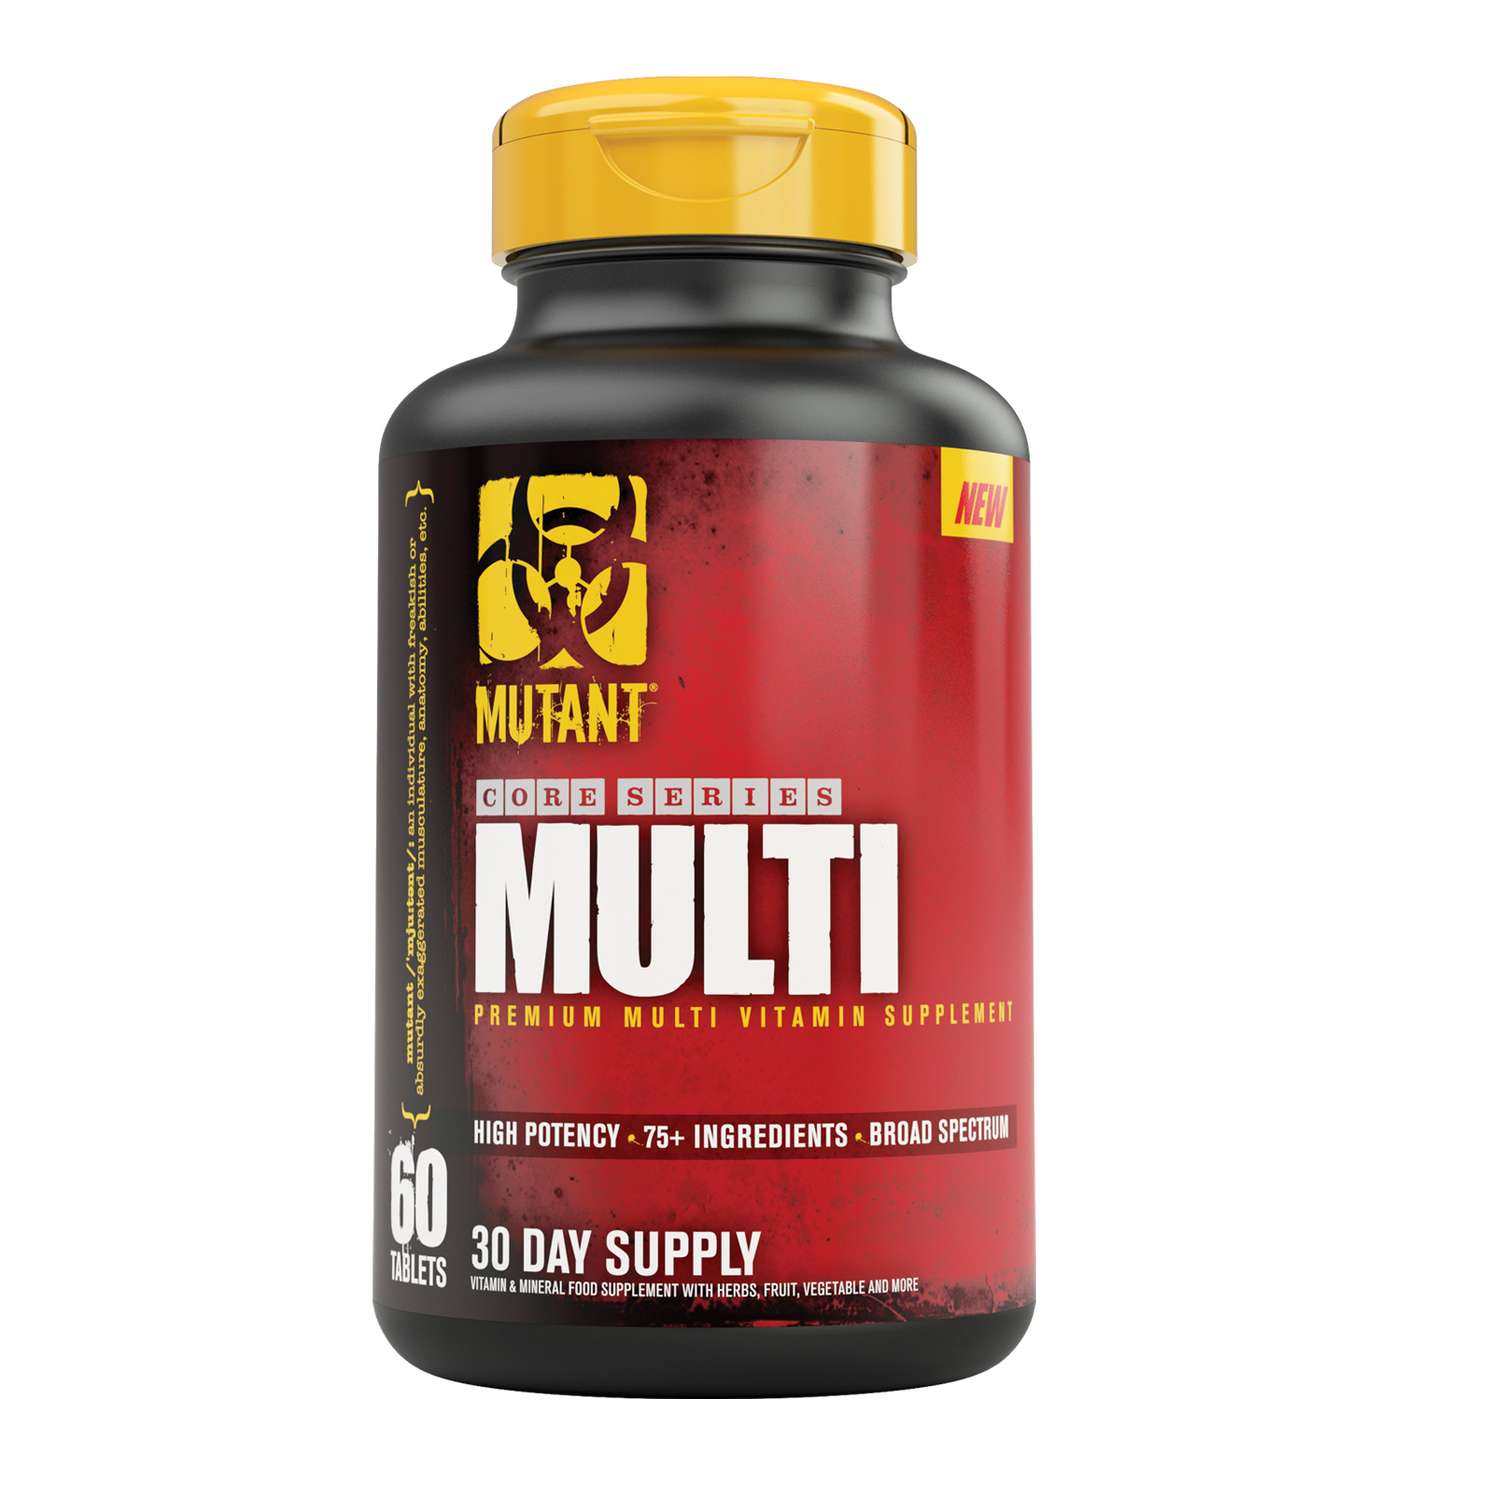 Витаминный комплекс MUTANT Core Series Multi Vitamin 60 таблеток - фото 1